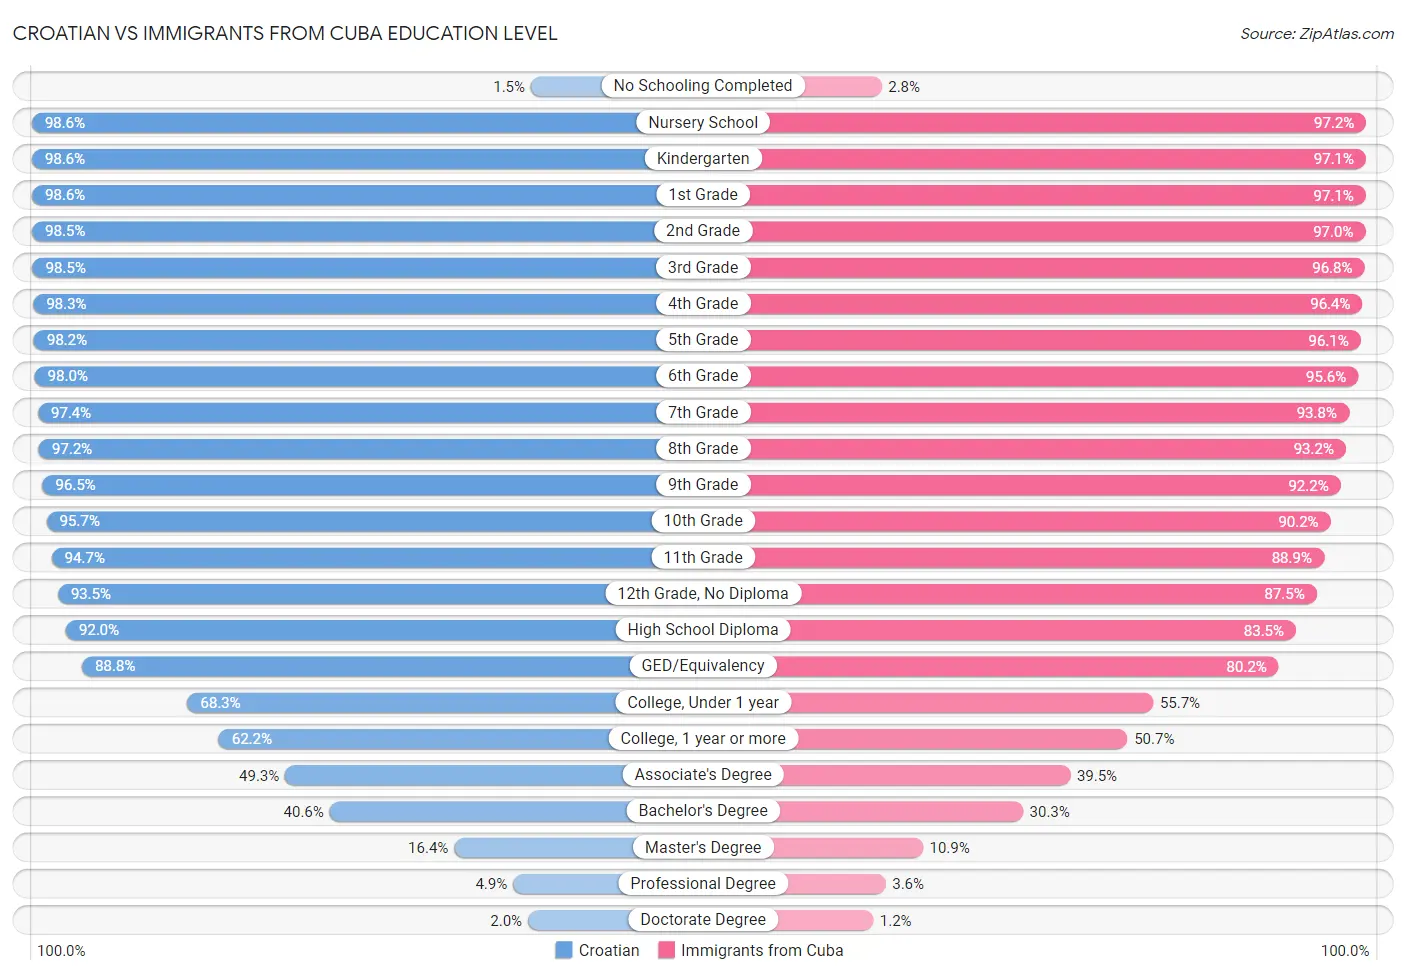 Croatian vs Immigrants from Cuba Education Level